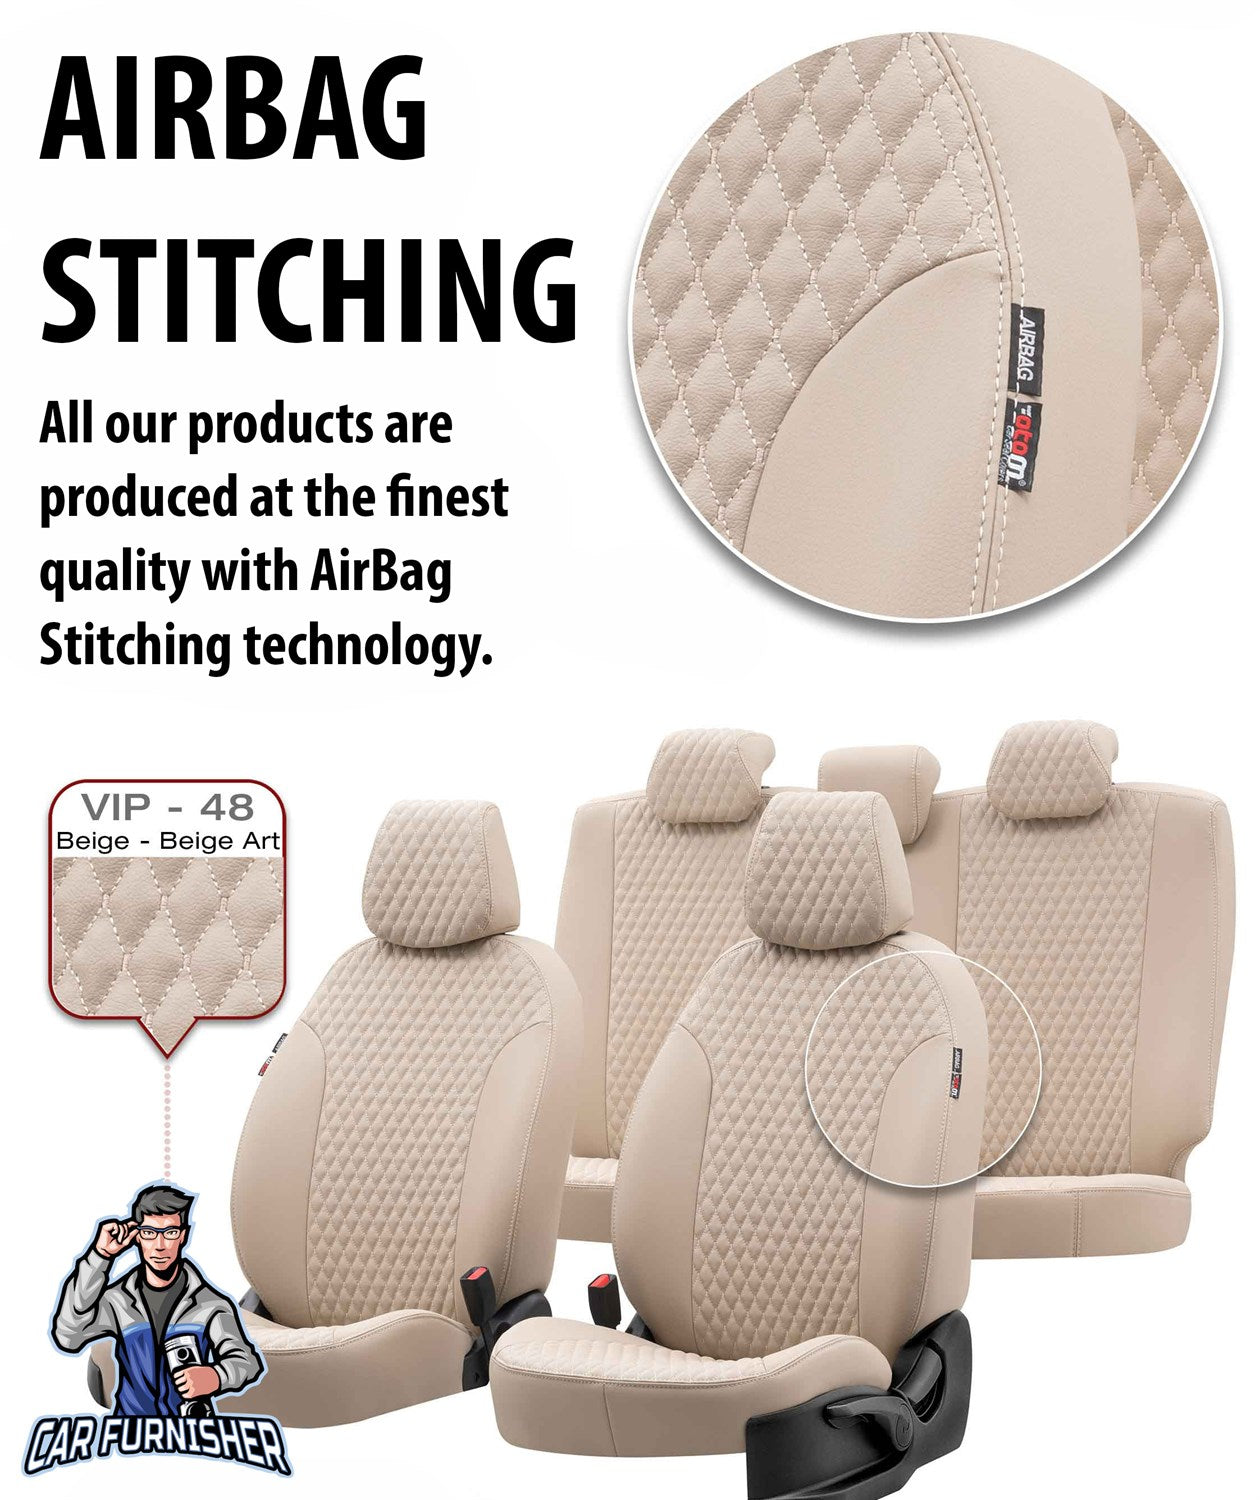 Daihatsu Materia Seat Covers Amsterdam Leather Design Dark Gray Leather